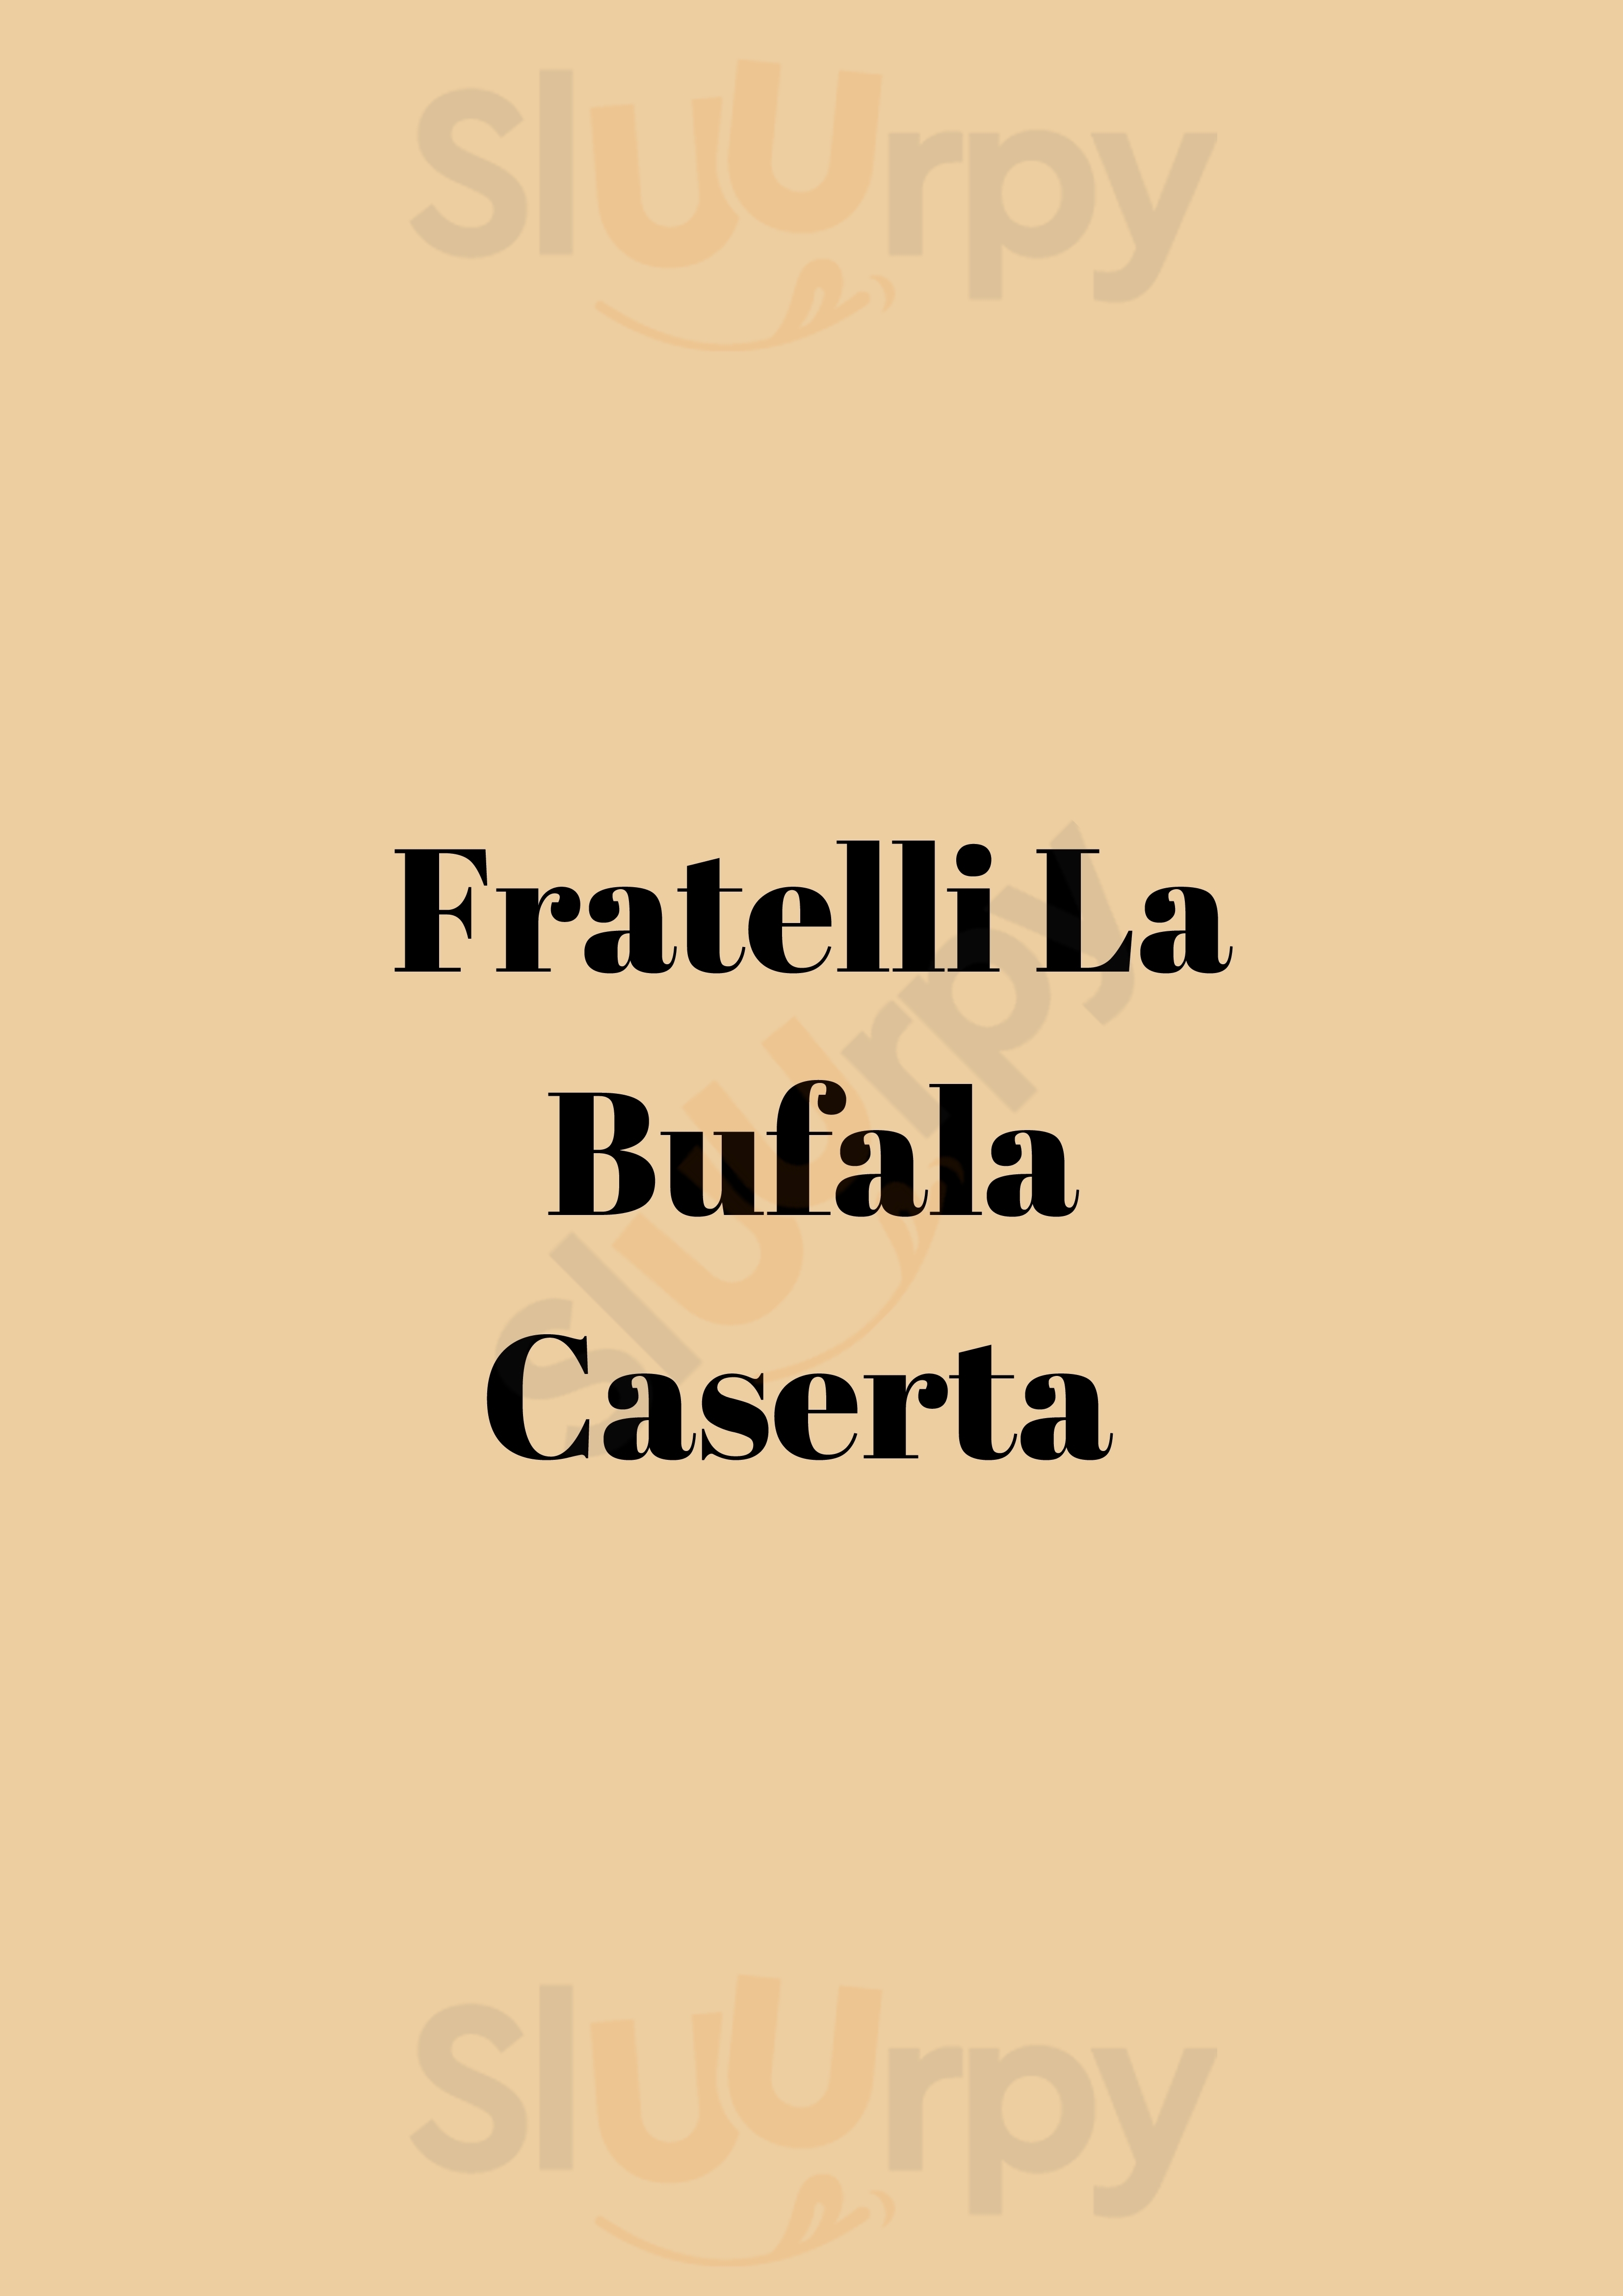 Fratelli La Bufala Caserta menù 1 pagina